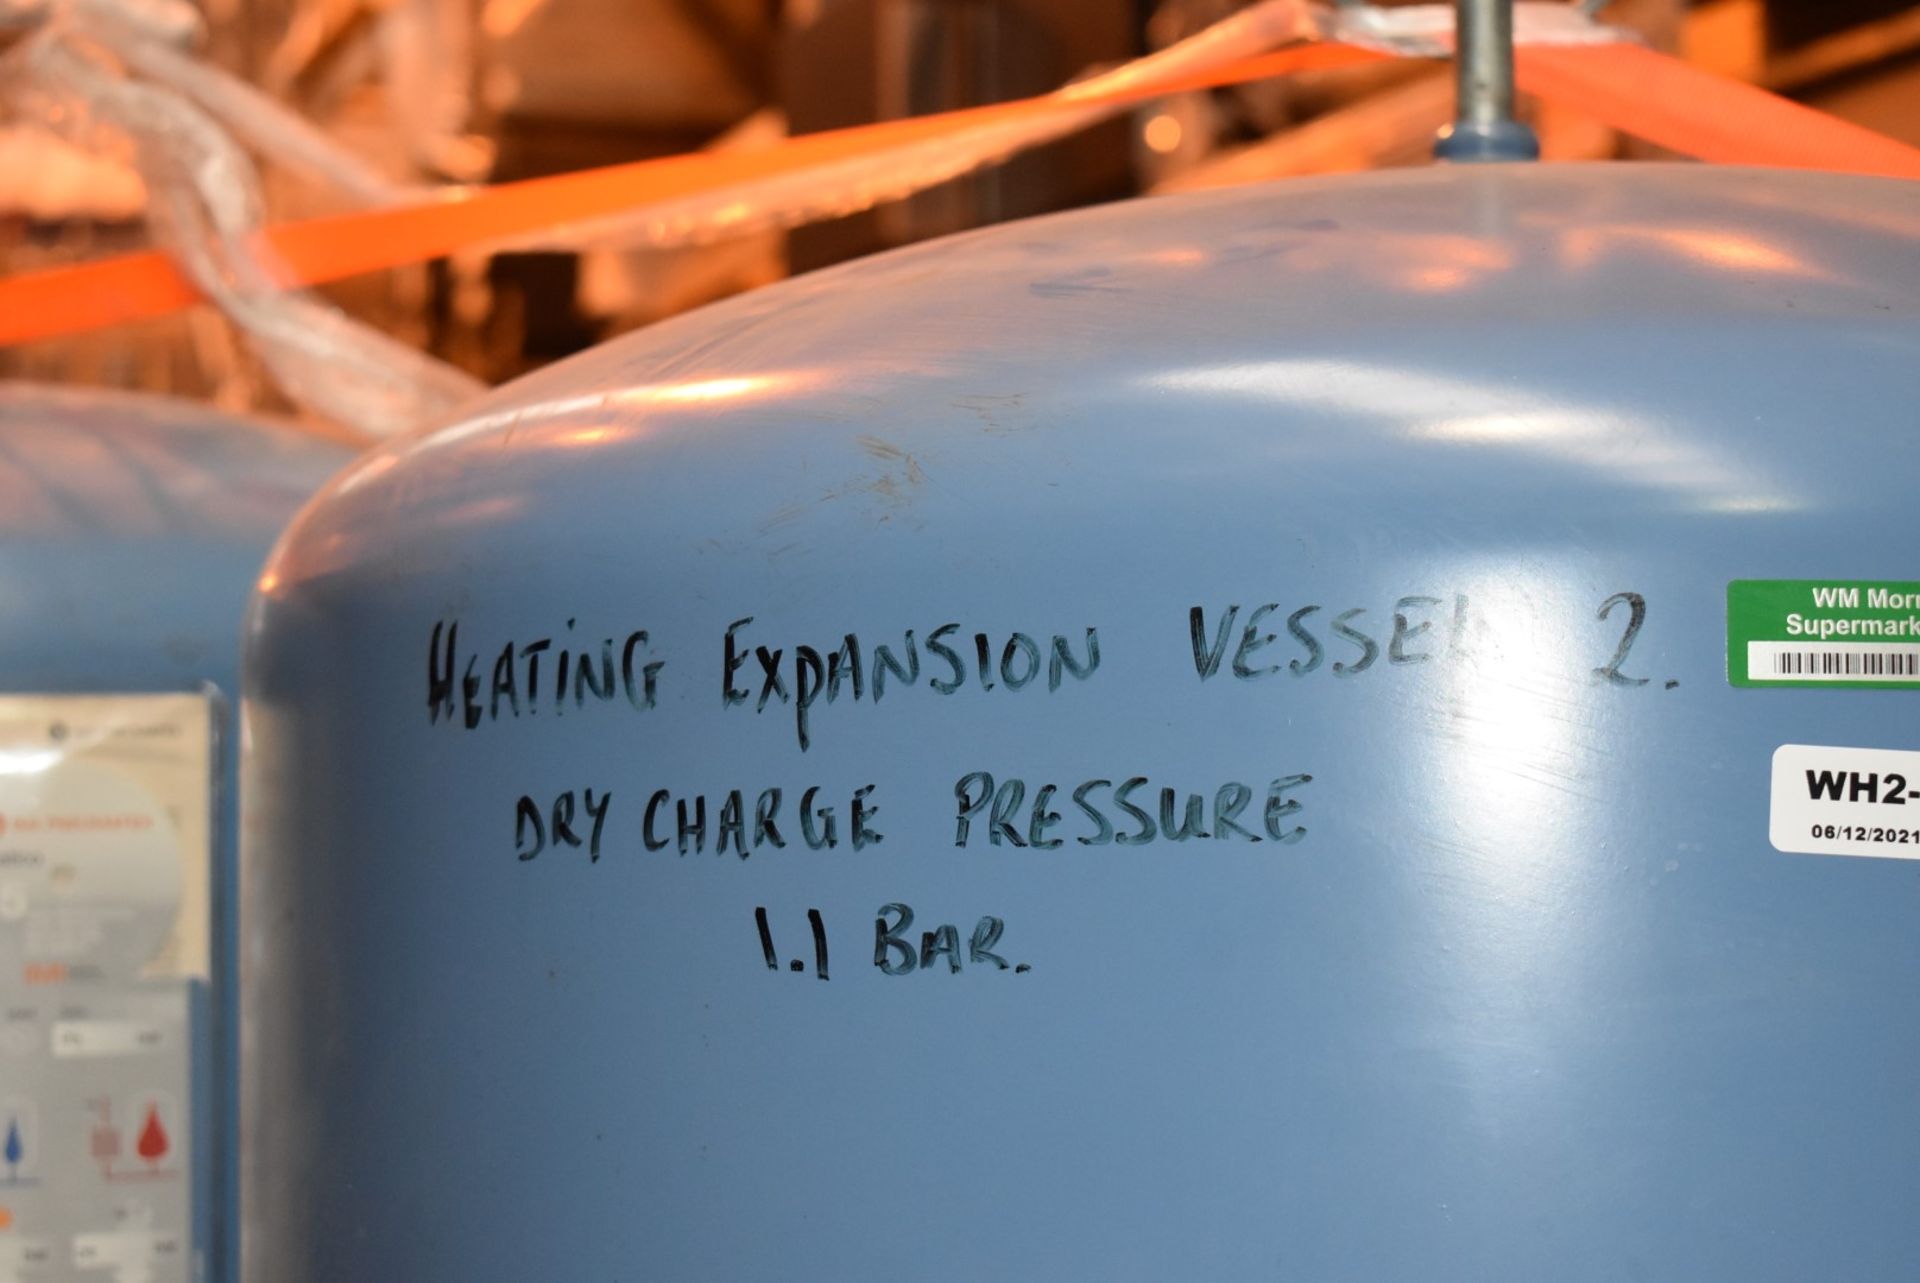 1 x Pneumatex Statico 500L 6 Bar Pressure Expansion Vessel - Product Code: SU 500.6 - RRP £1,678 - Image 3 of 7